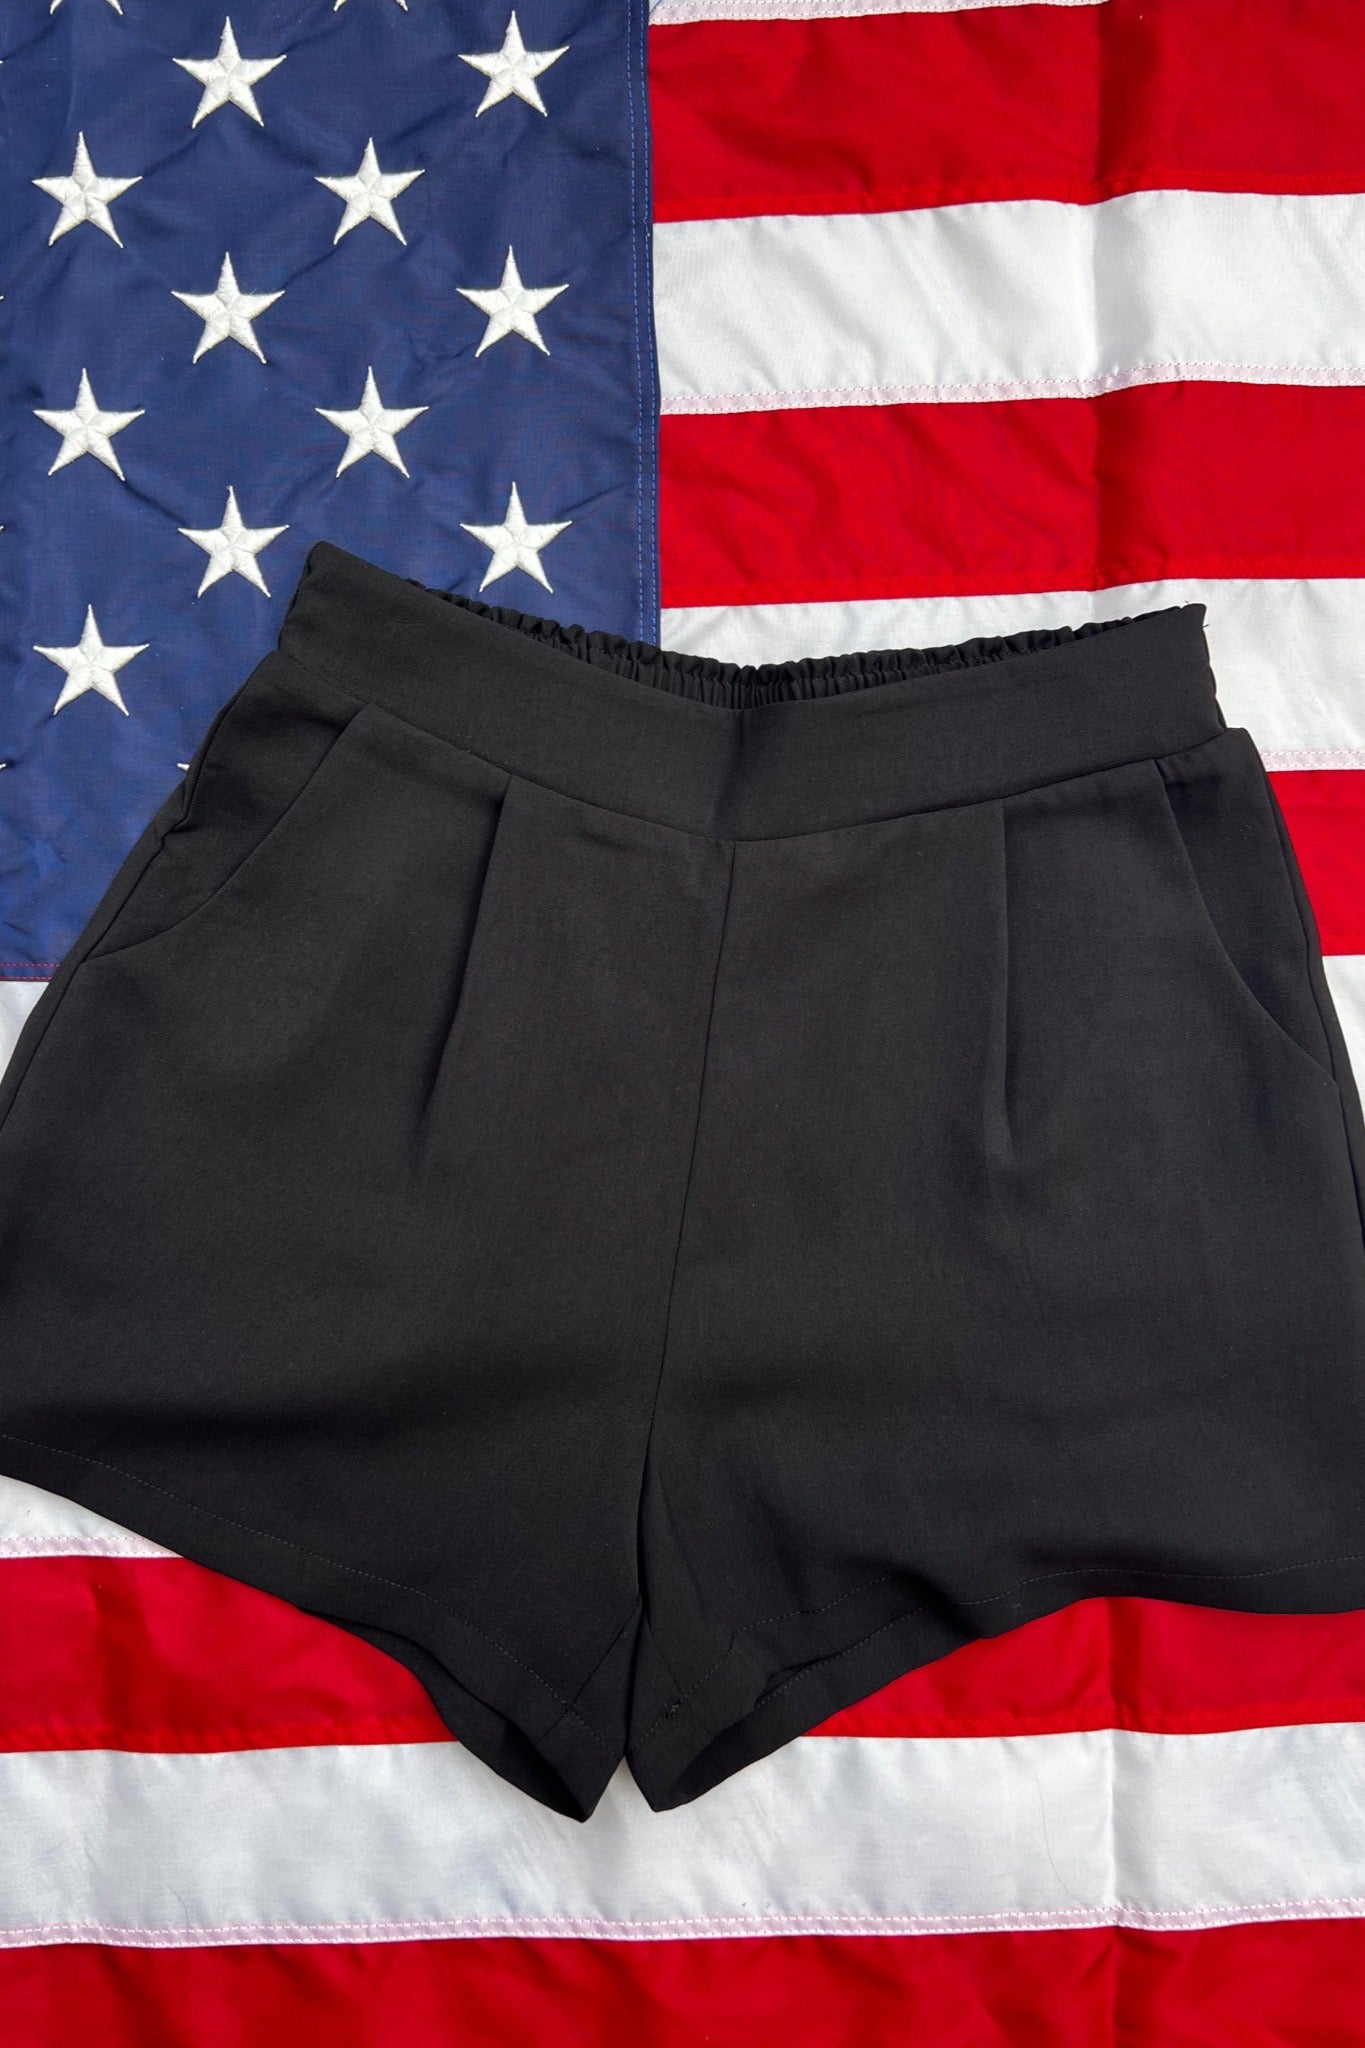 All American Girl Shorts in Black